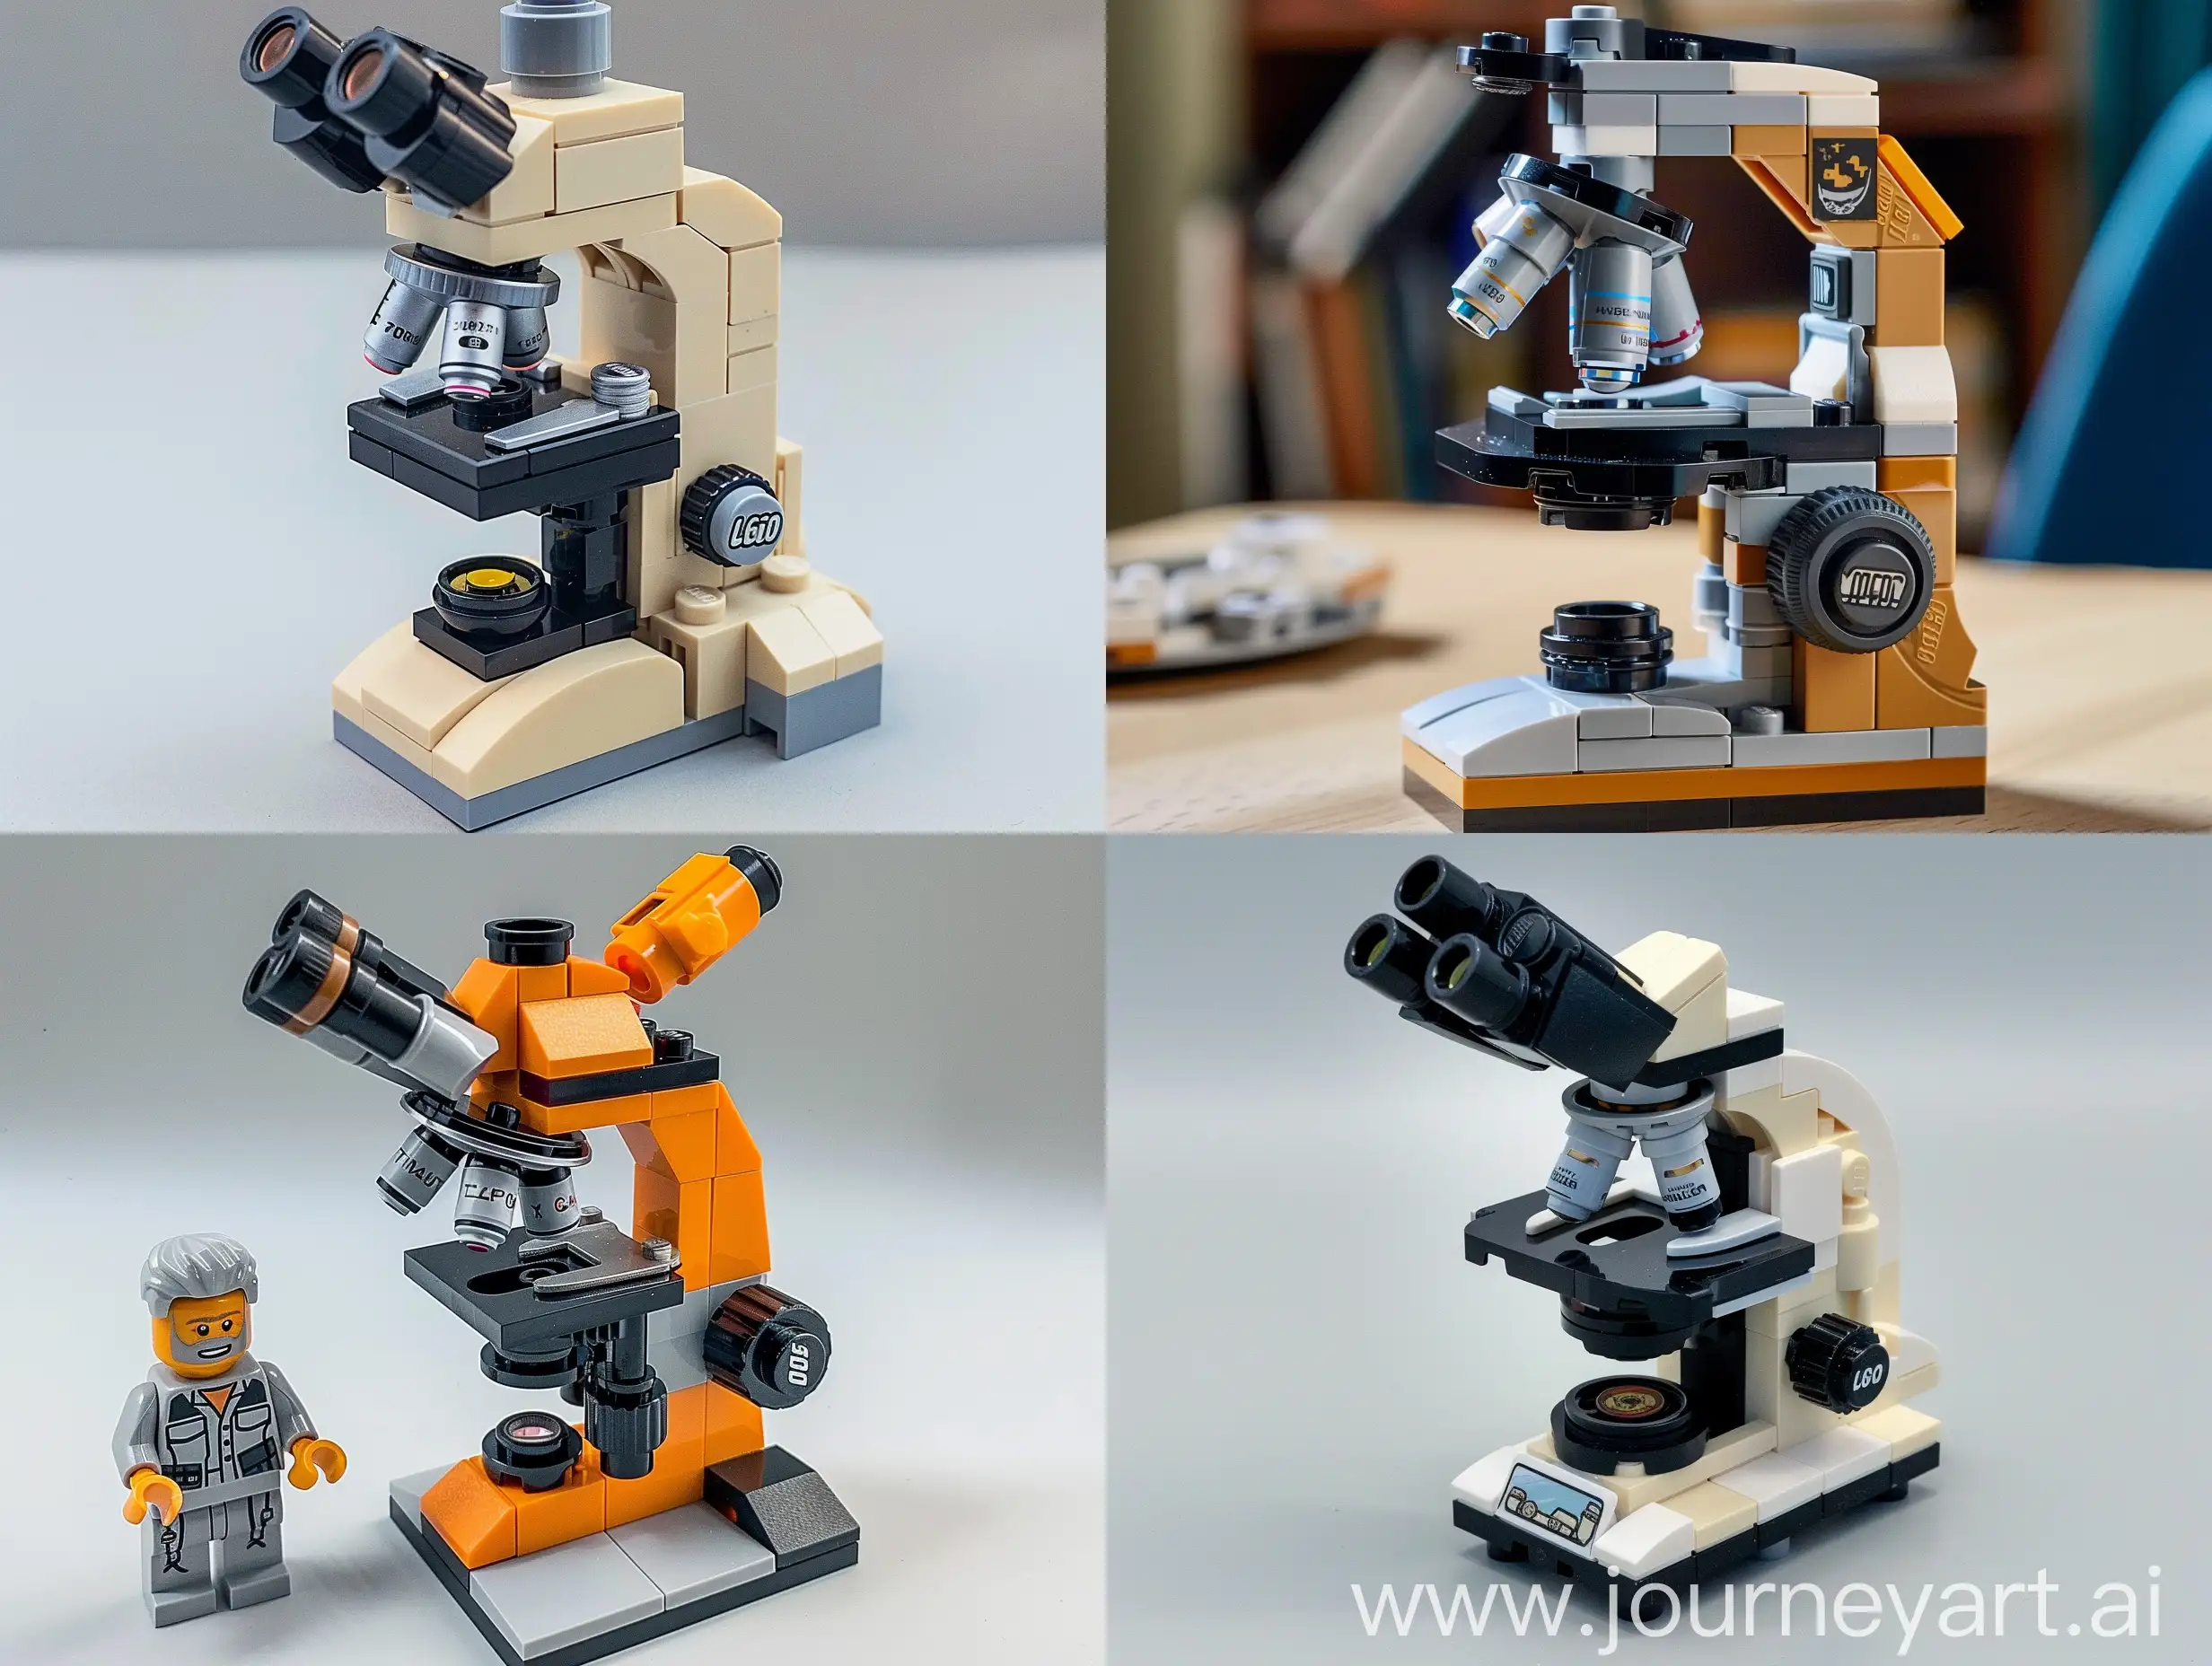 LEGO set of microscope